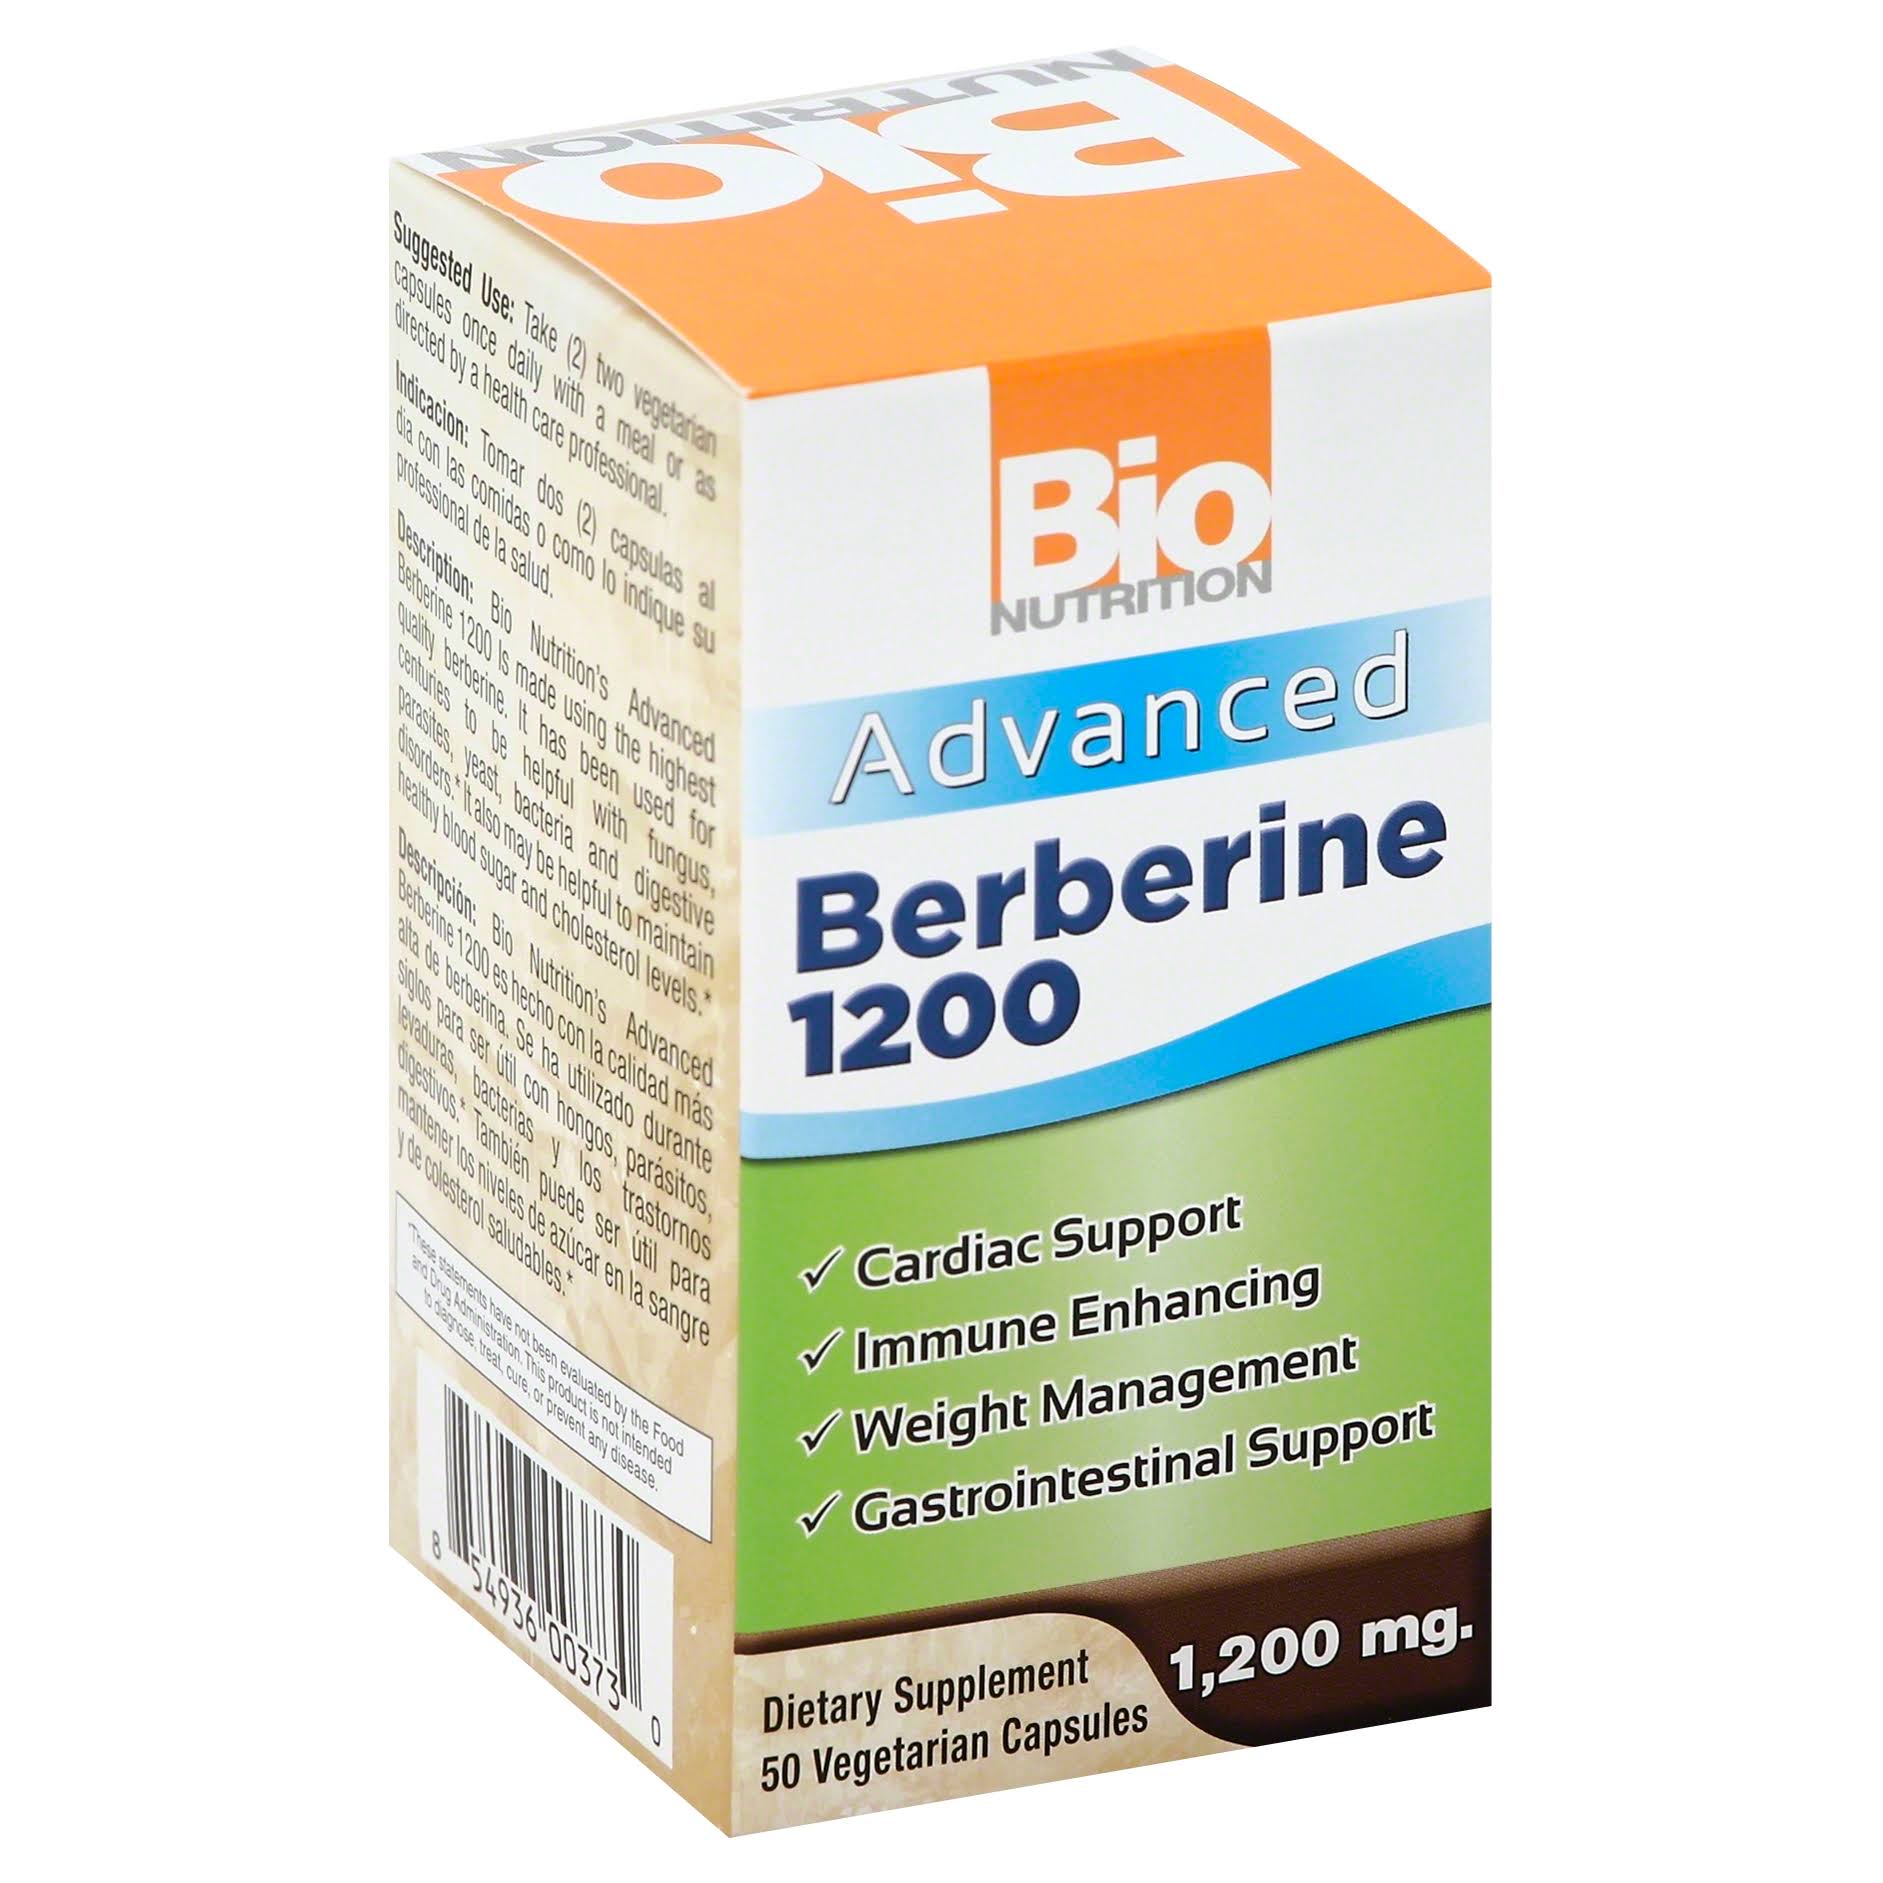 Bio Nutrition Advanced Berberine Supplement - 1200mg, 50ct